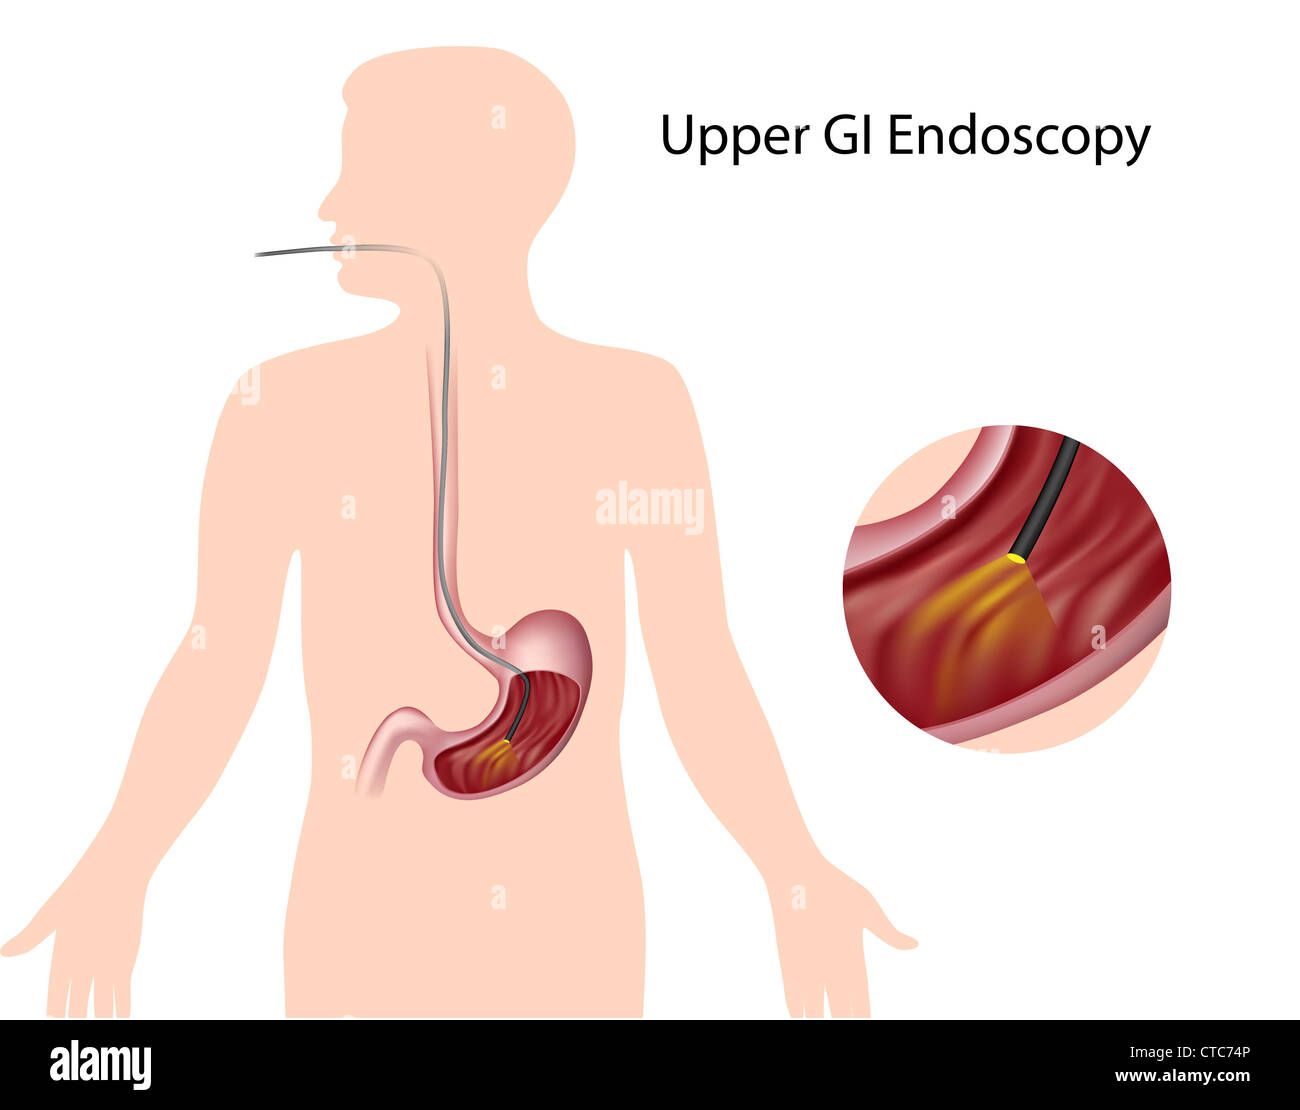 Upper gastrointestinal endoscopy Stock Photo